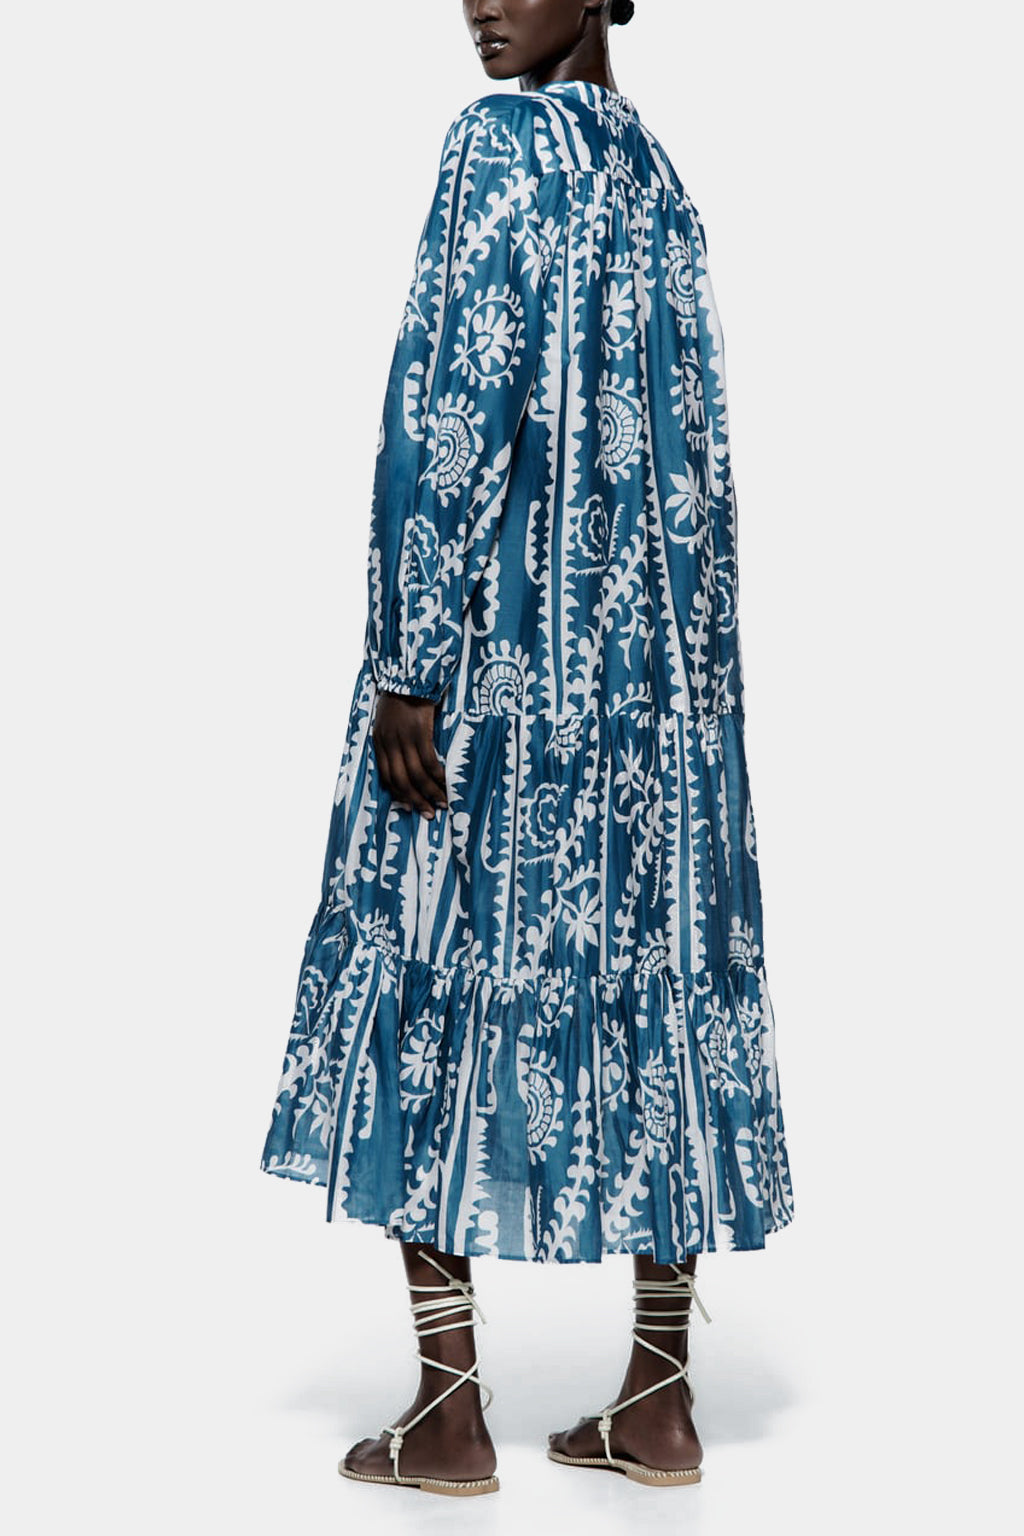 Zara - Printed Panel Dress